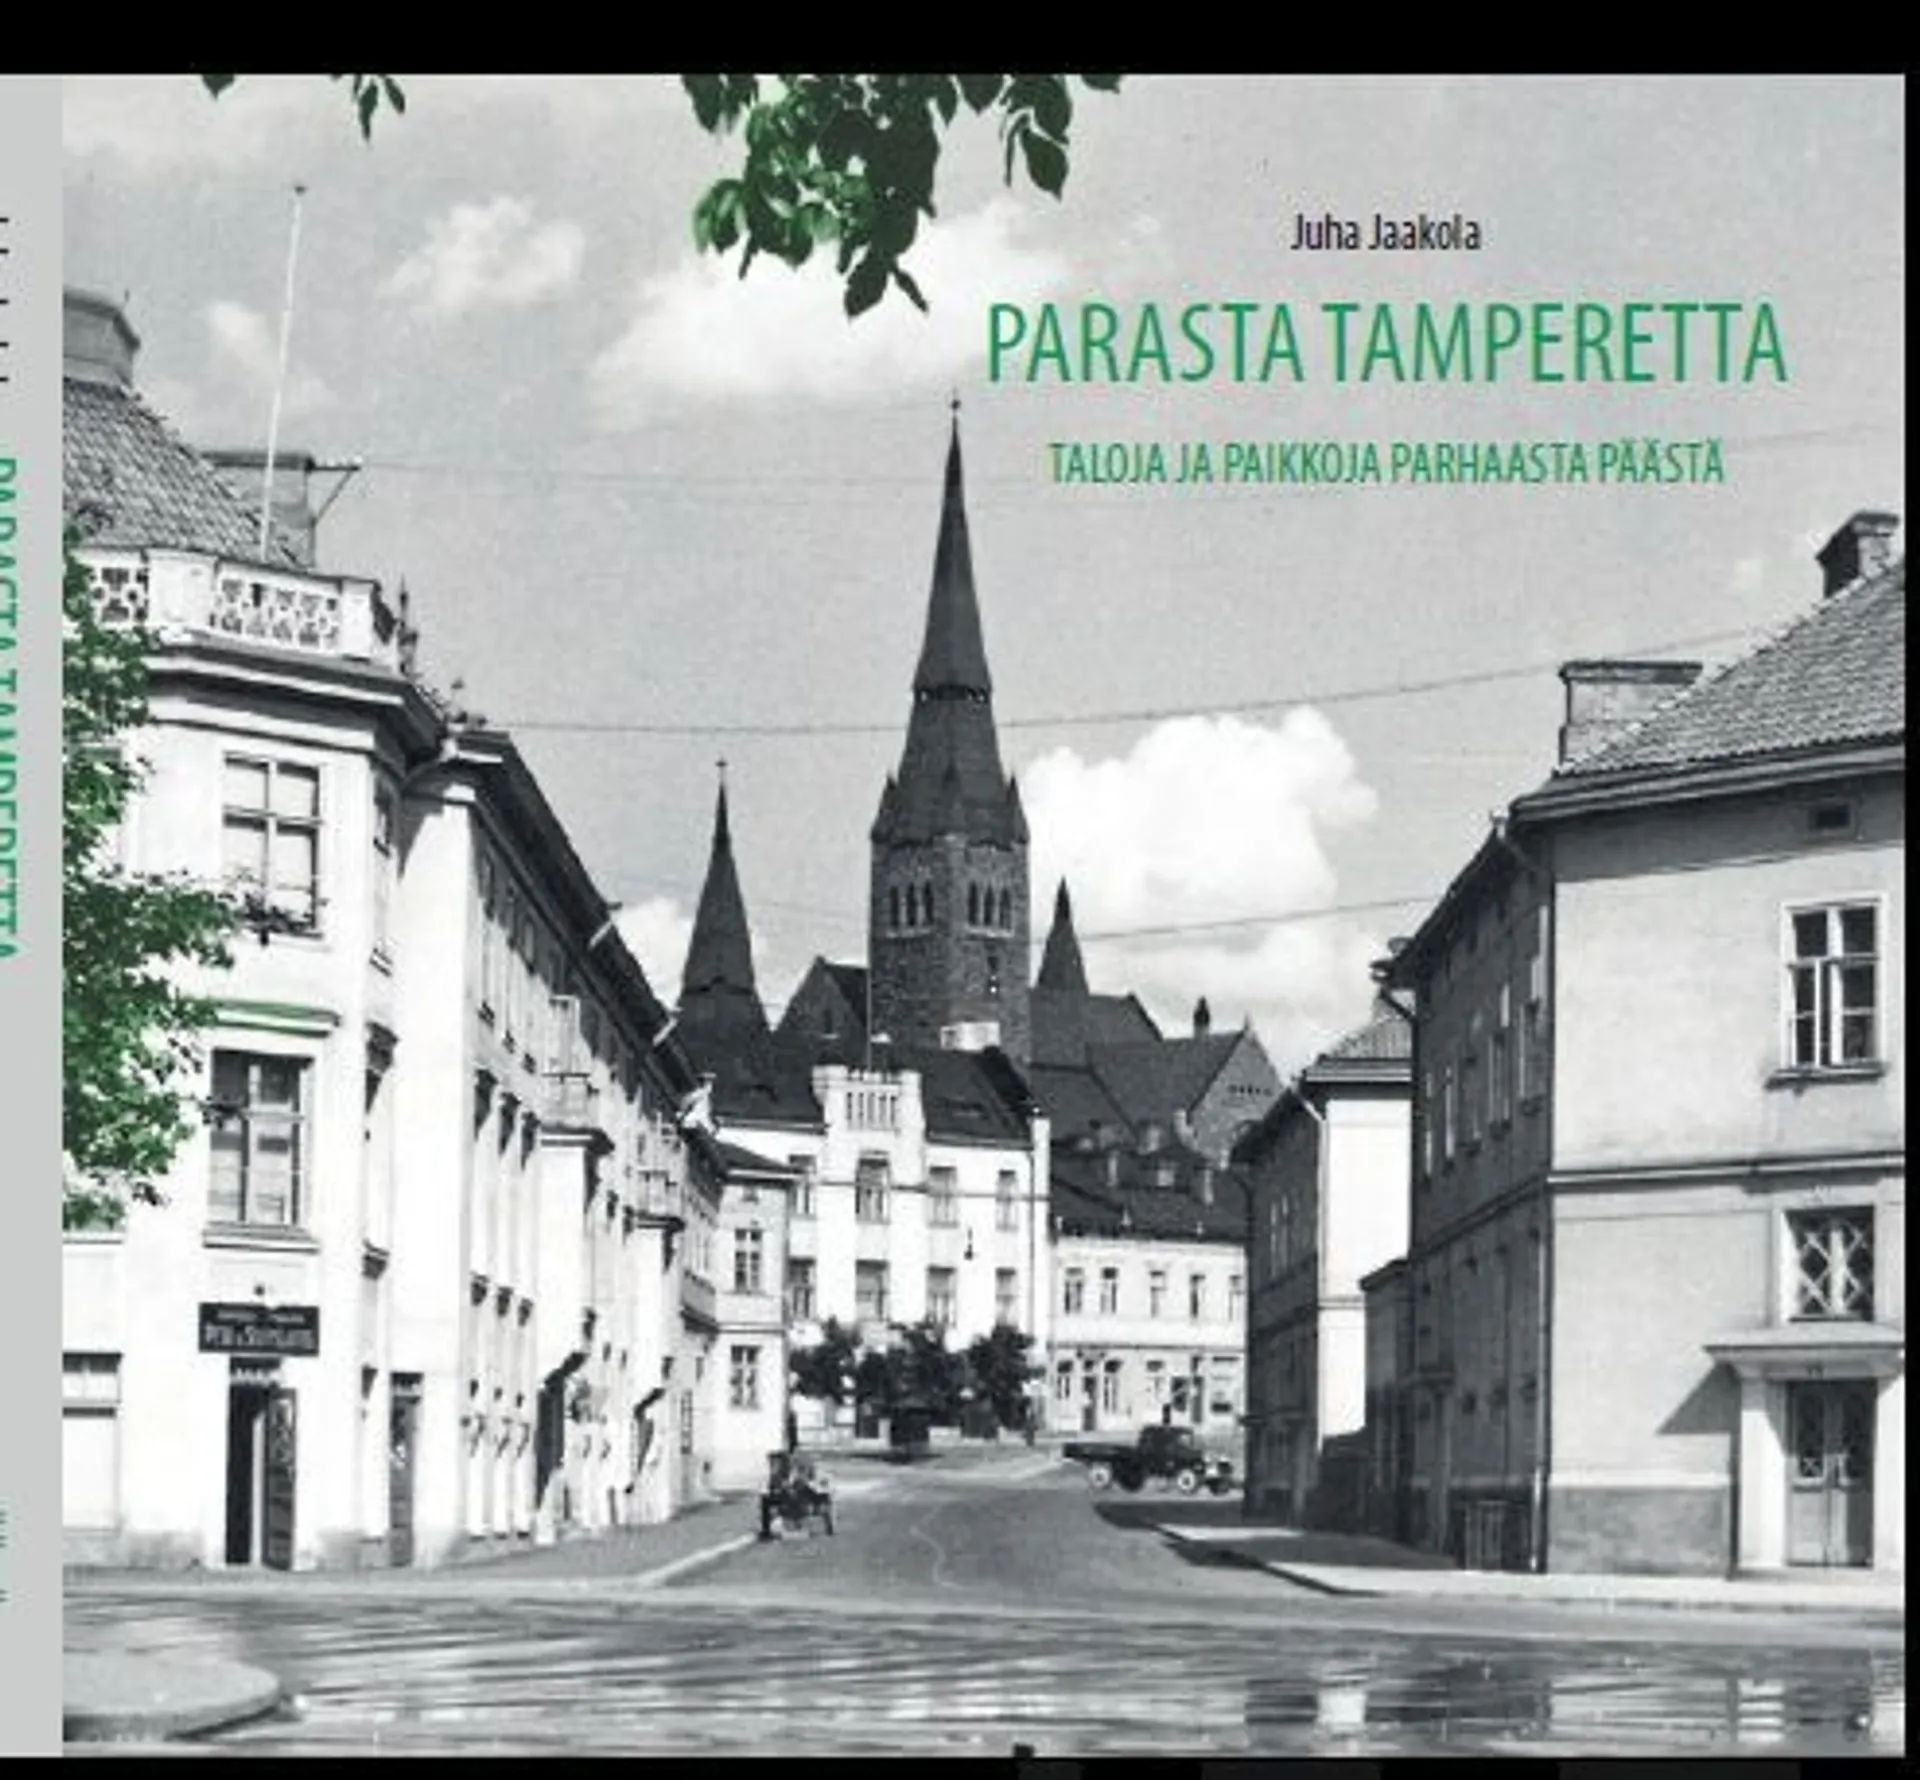 Jaakola, Parasta Tamperetta